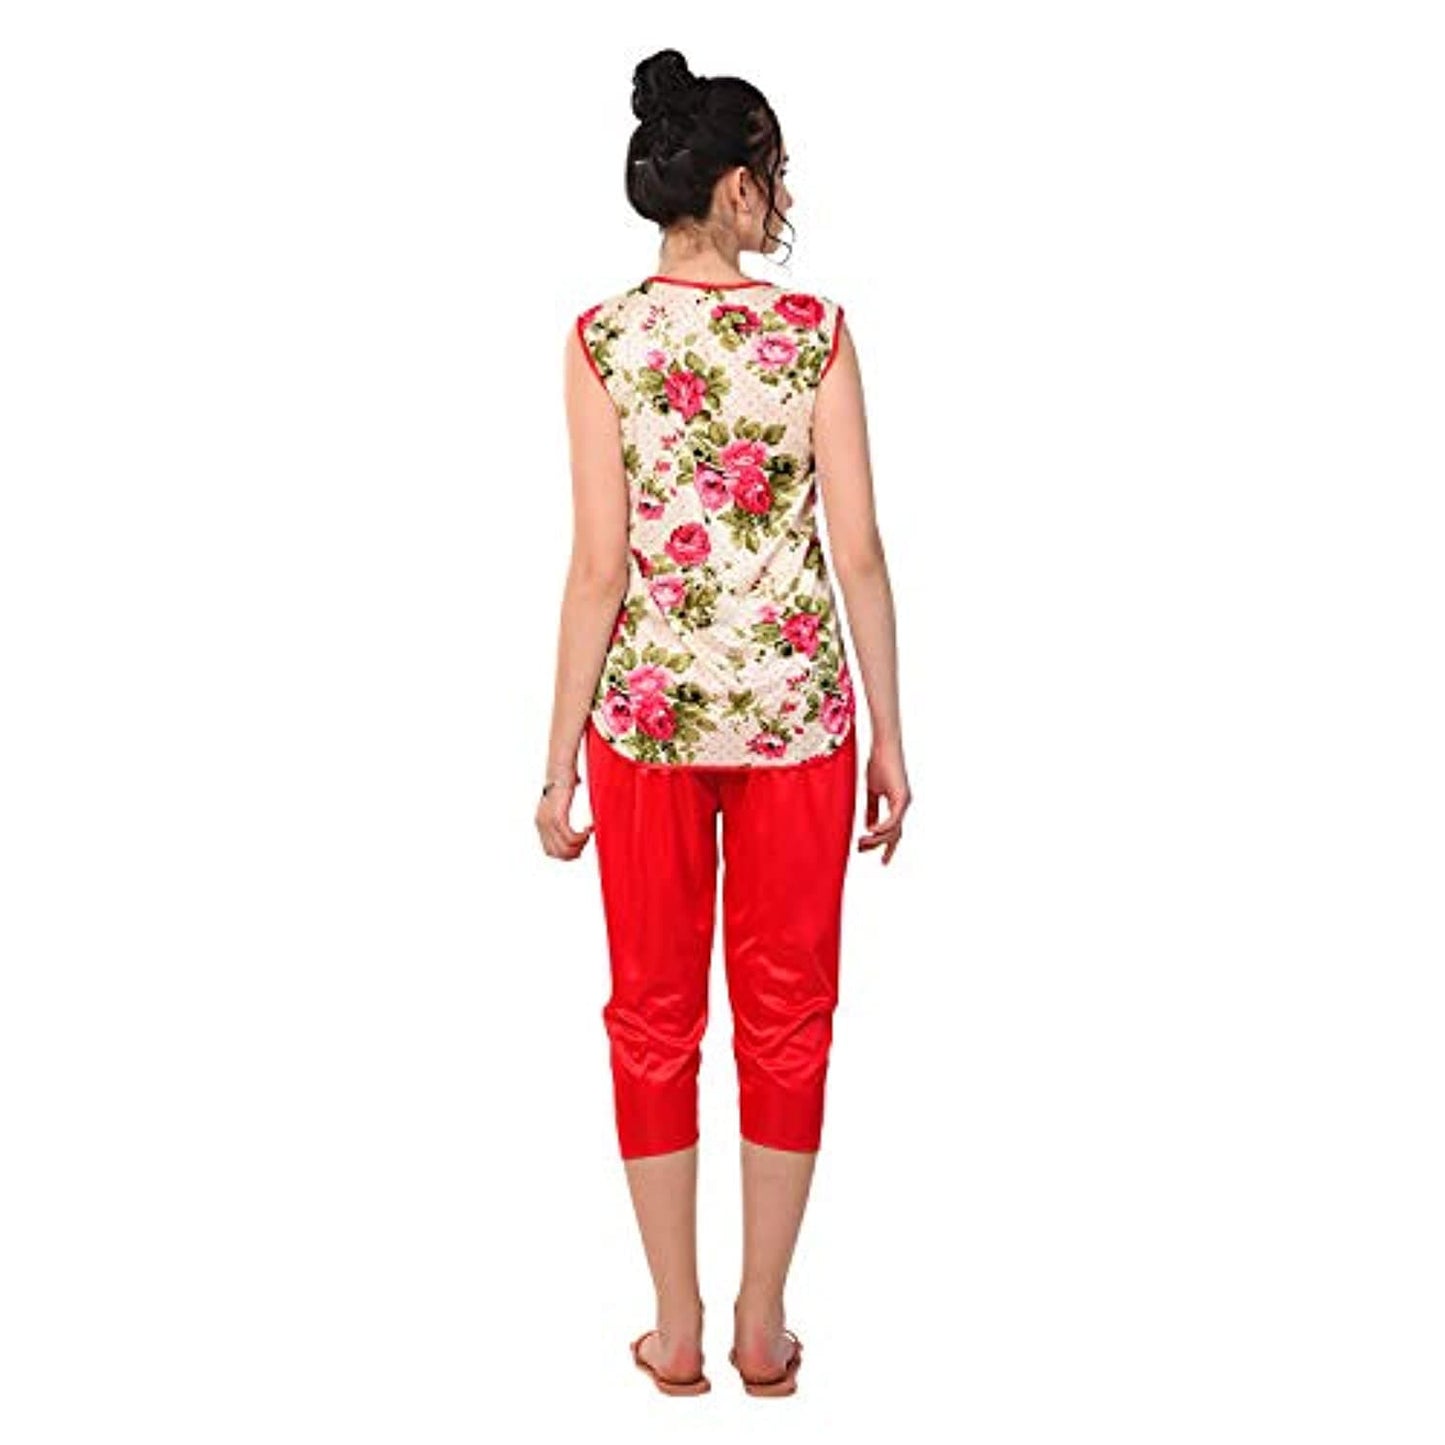 Sleeveless Flower Print Top and Capri Pants Sleepwear Set